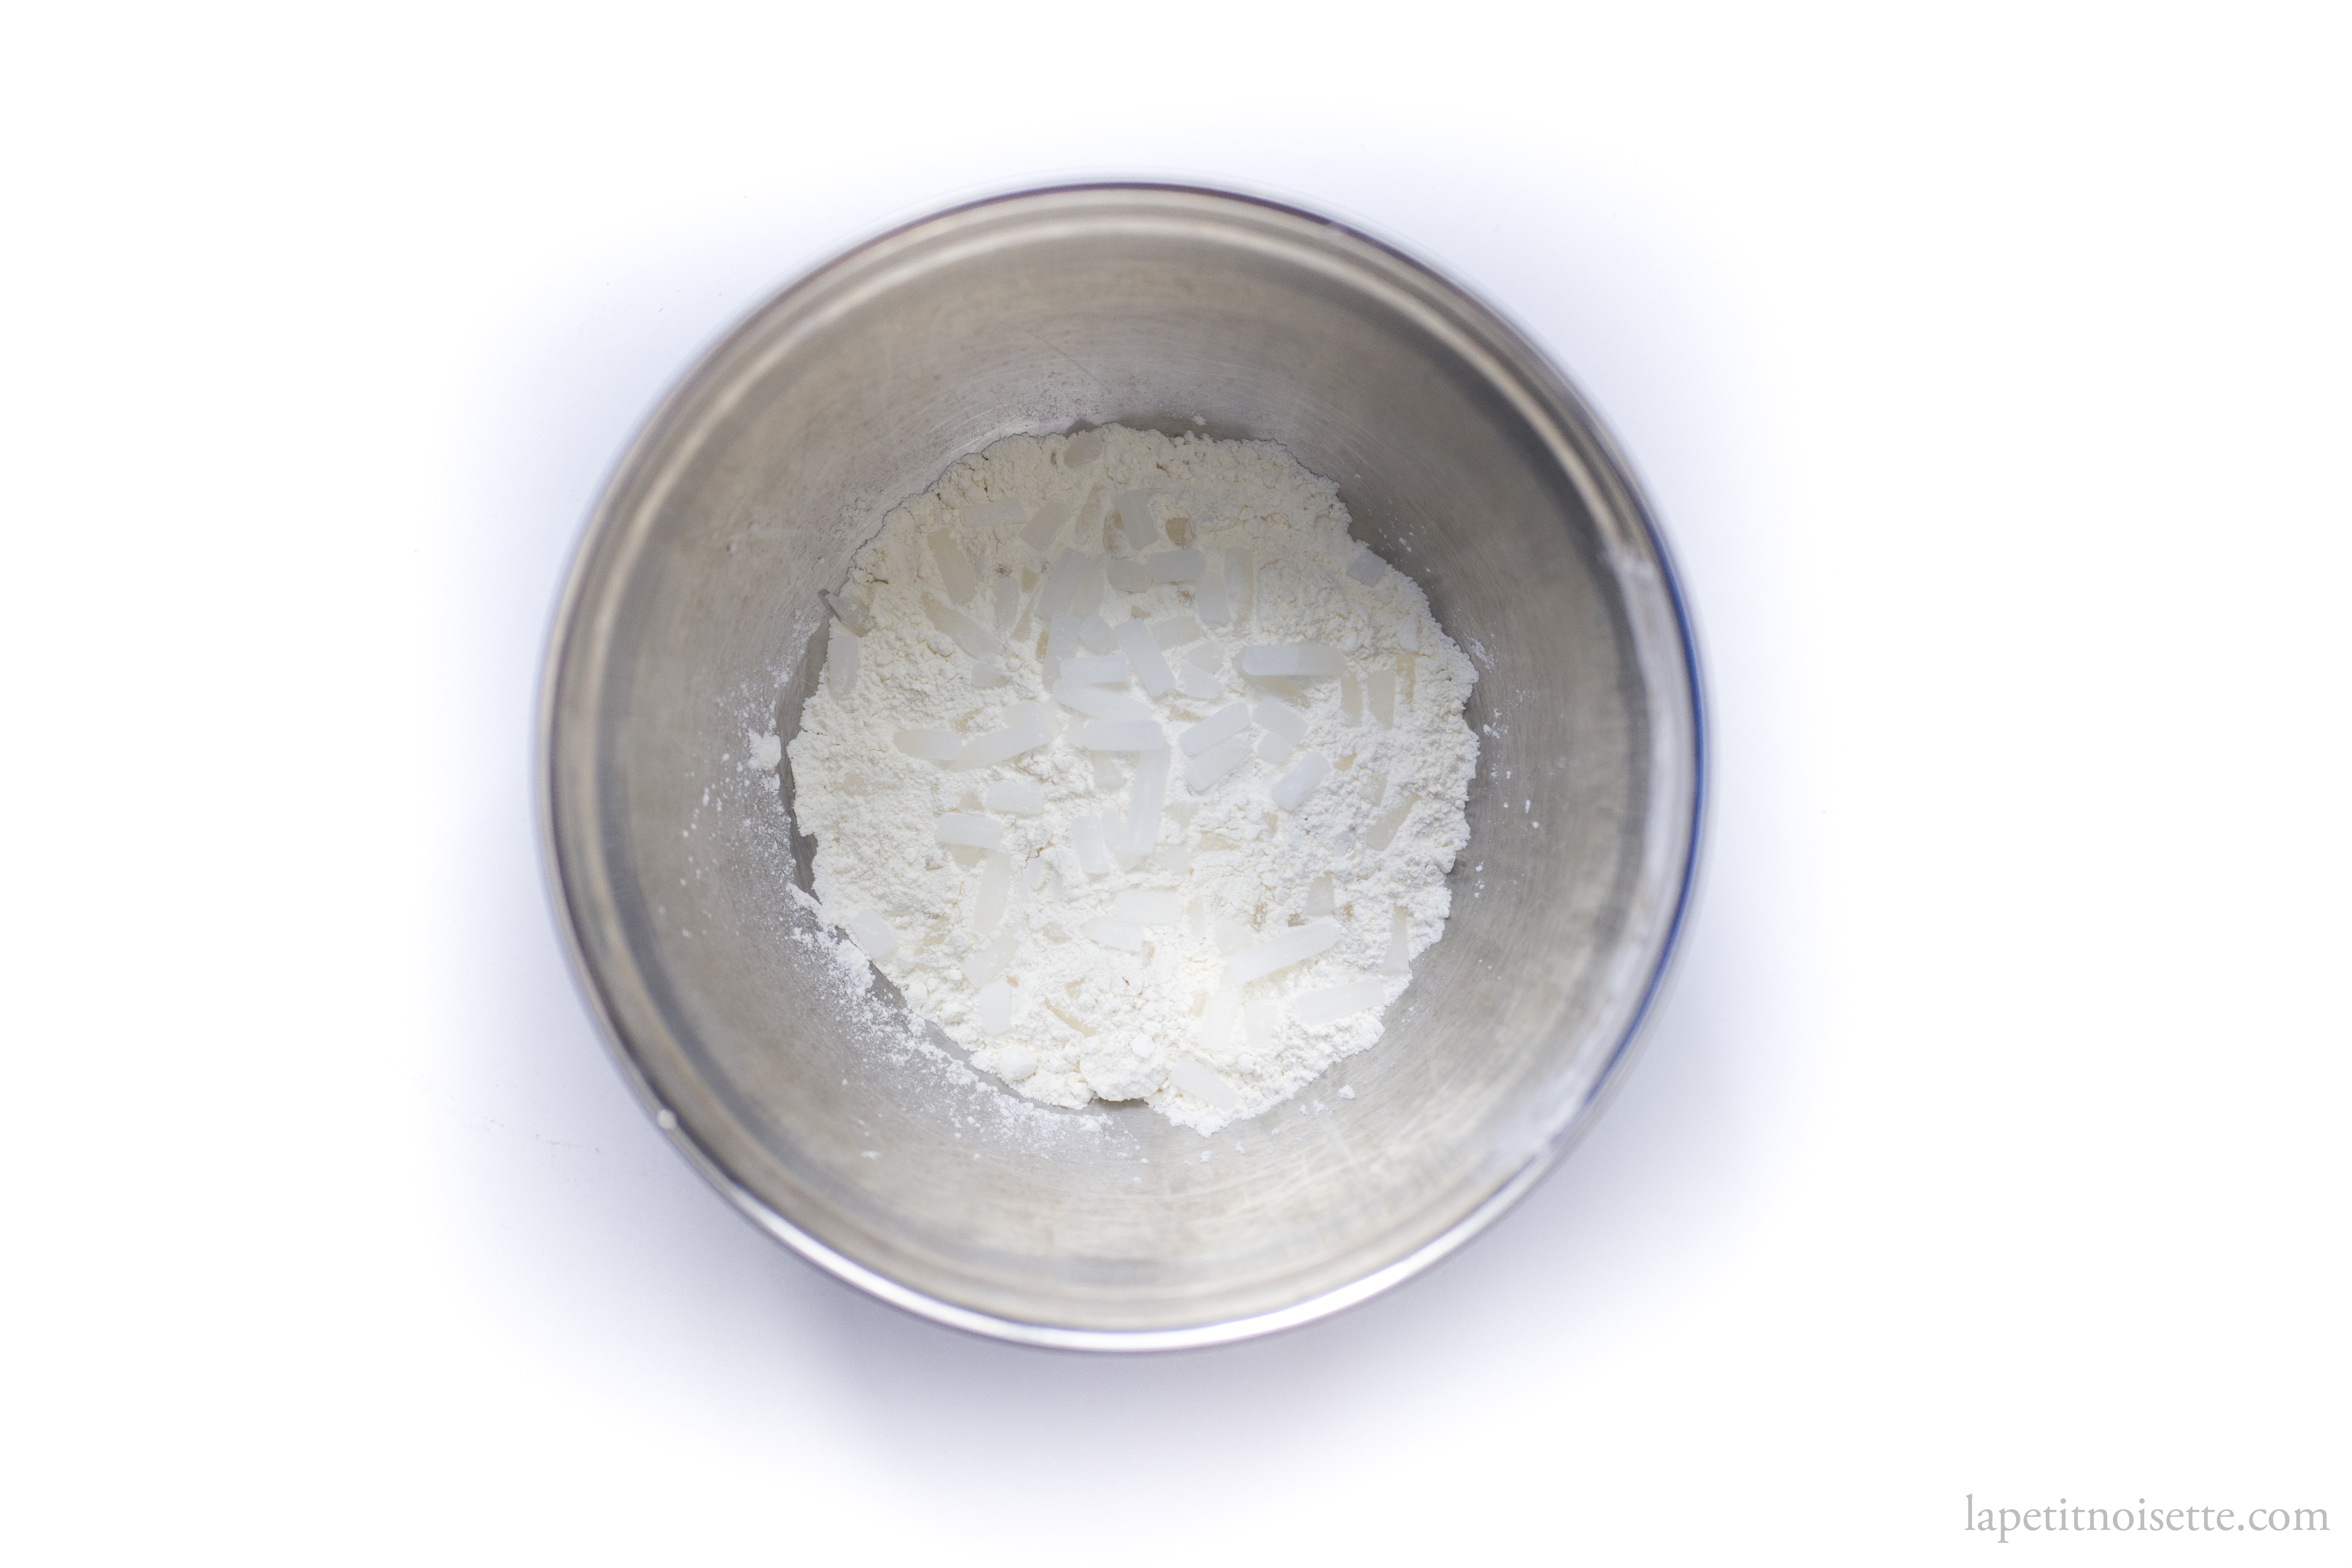 Tempura flour mixed with dry ice.